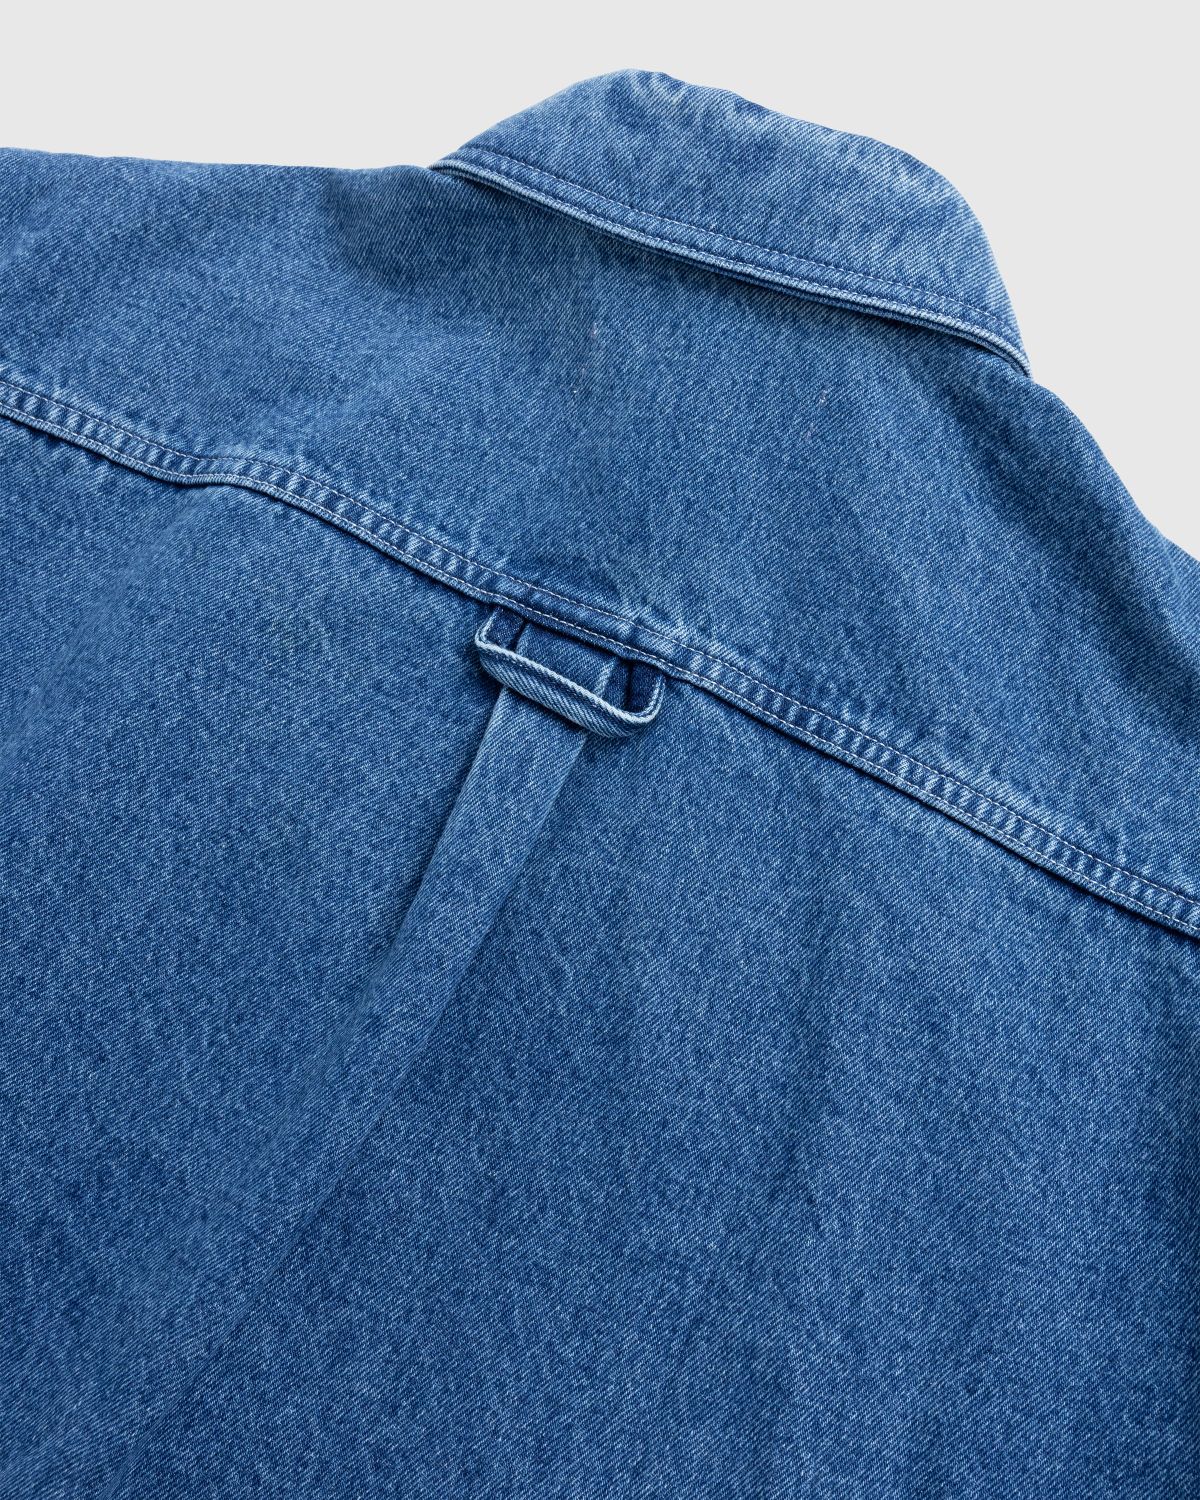 Y/Project – Classic Button Panel Denim Shirt Navy | Highsnobiety Shop